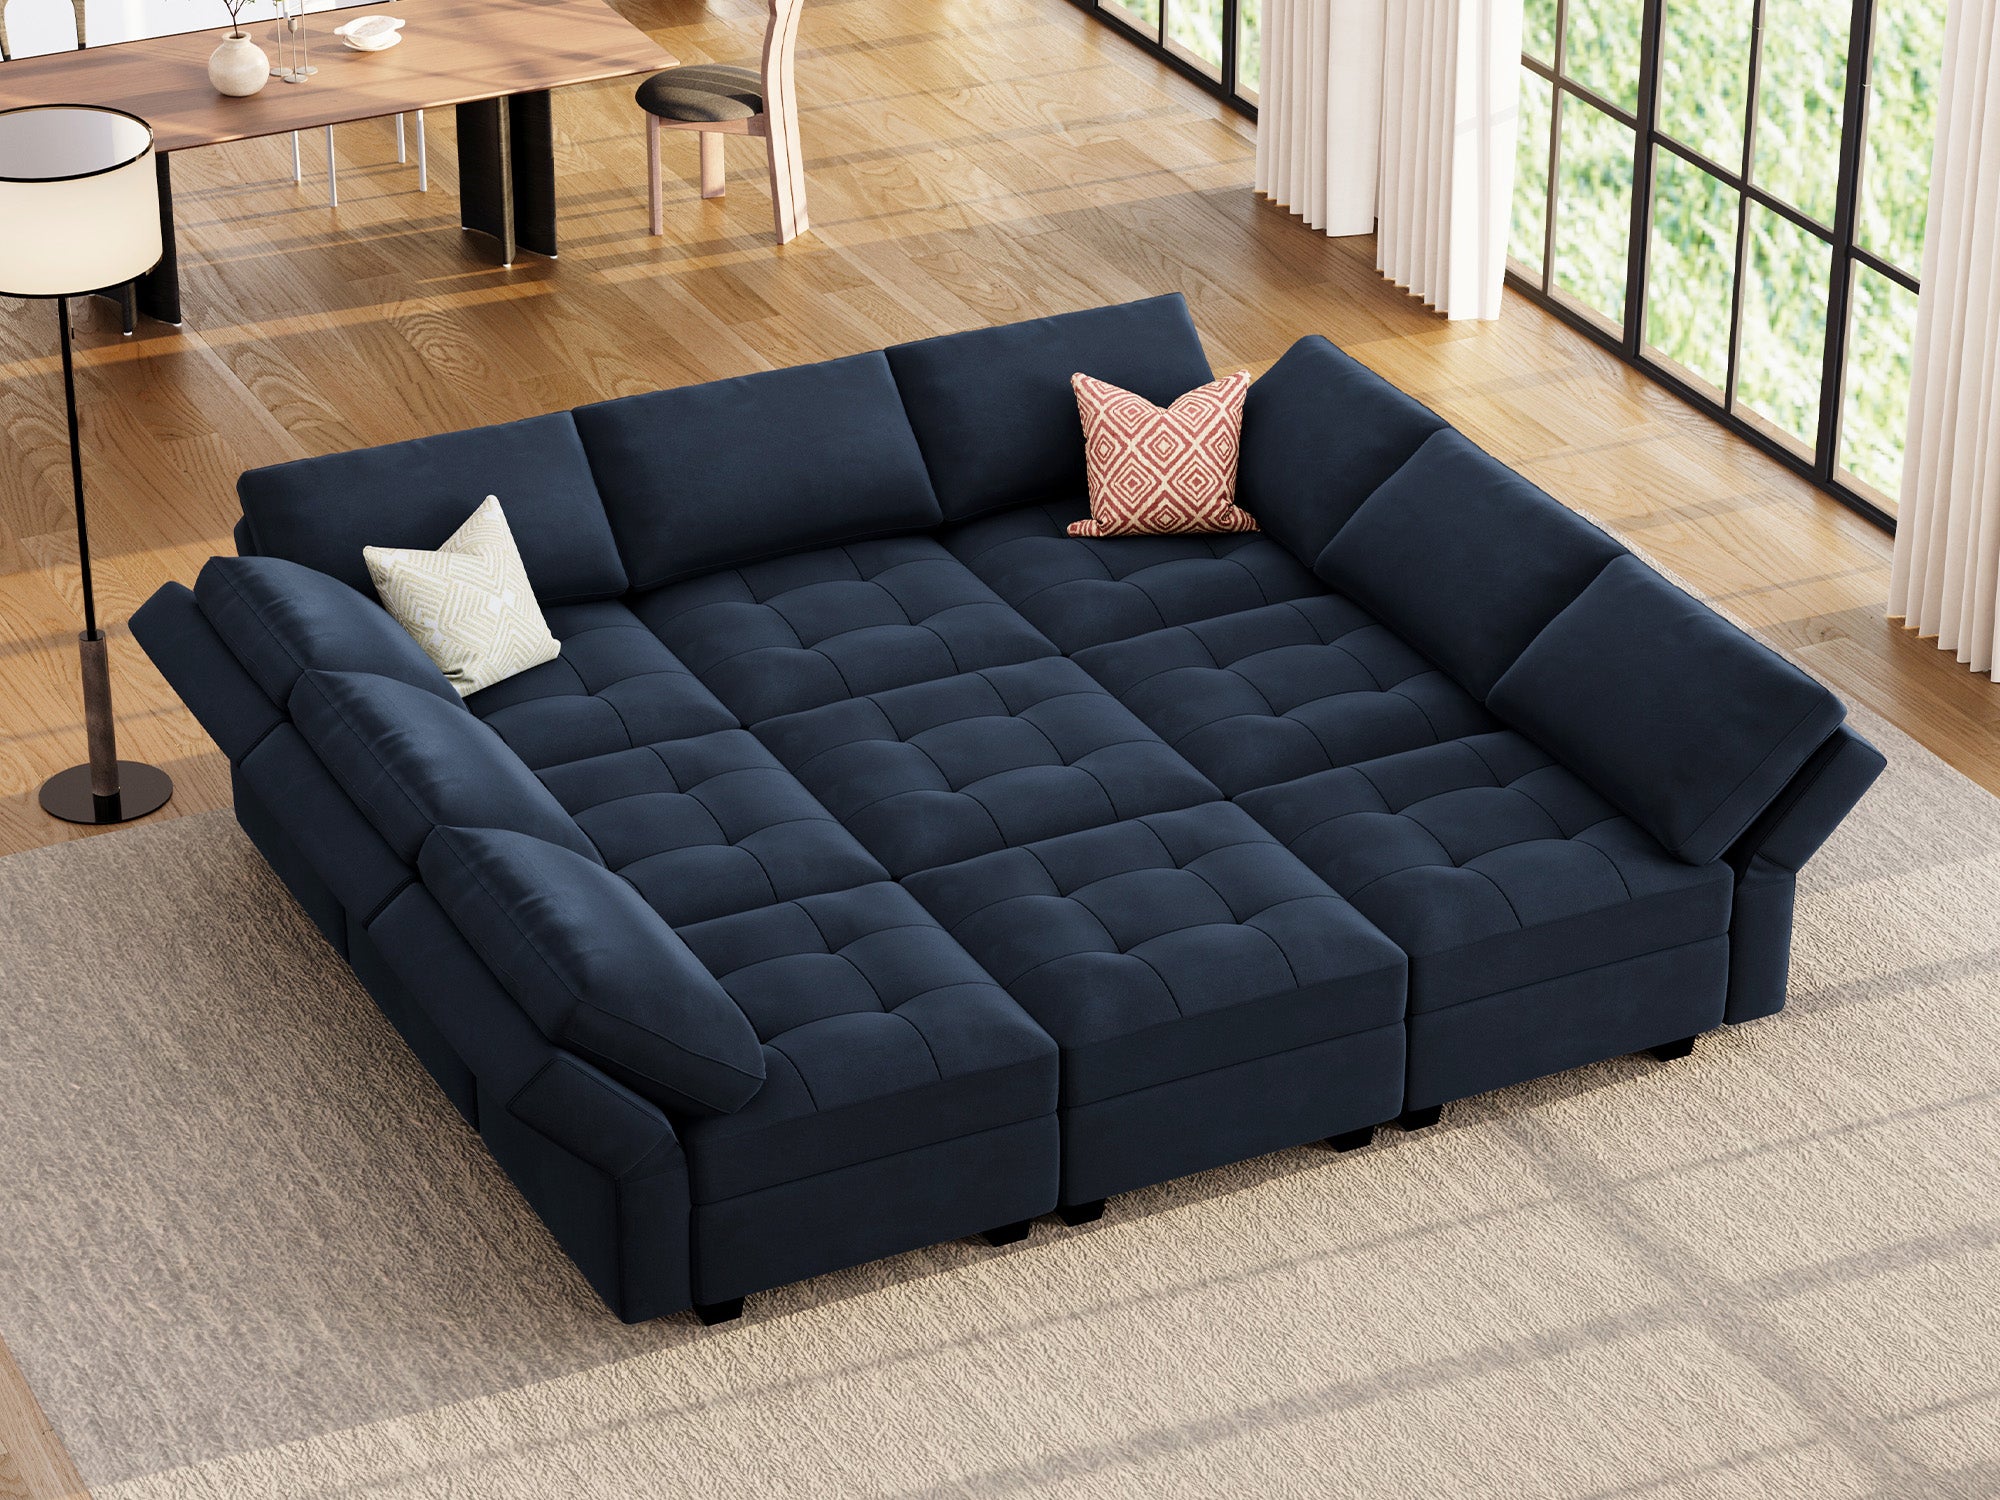 HONBAY 9-Piece Velvet Modular Sleeper Sectional Adjustable Sofa With Storage Seat